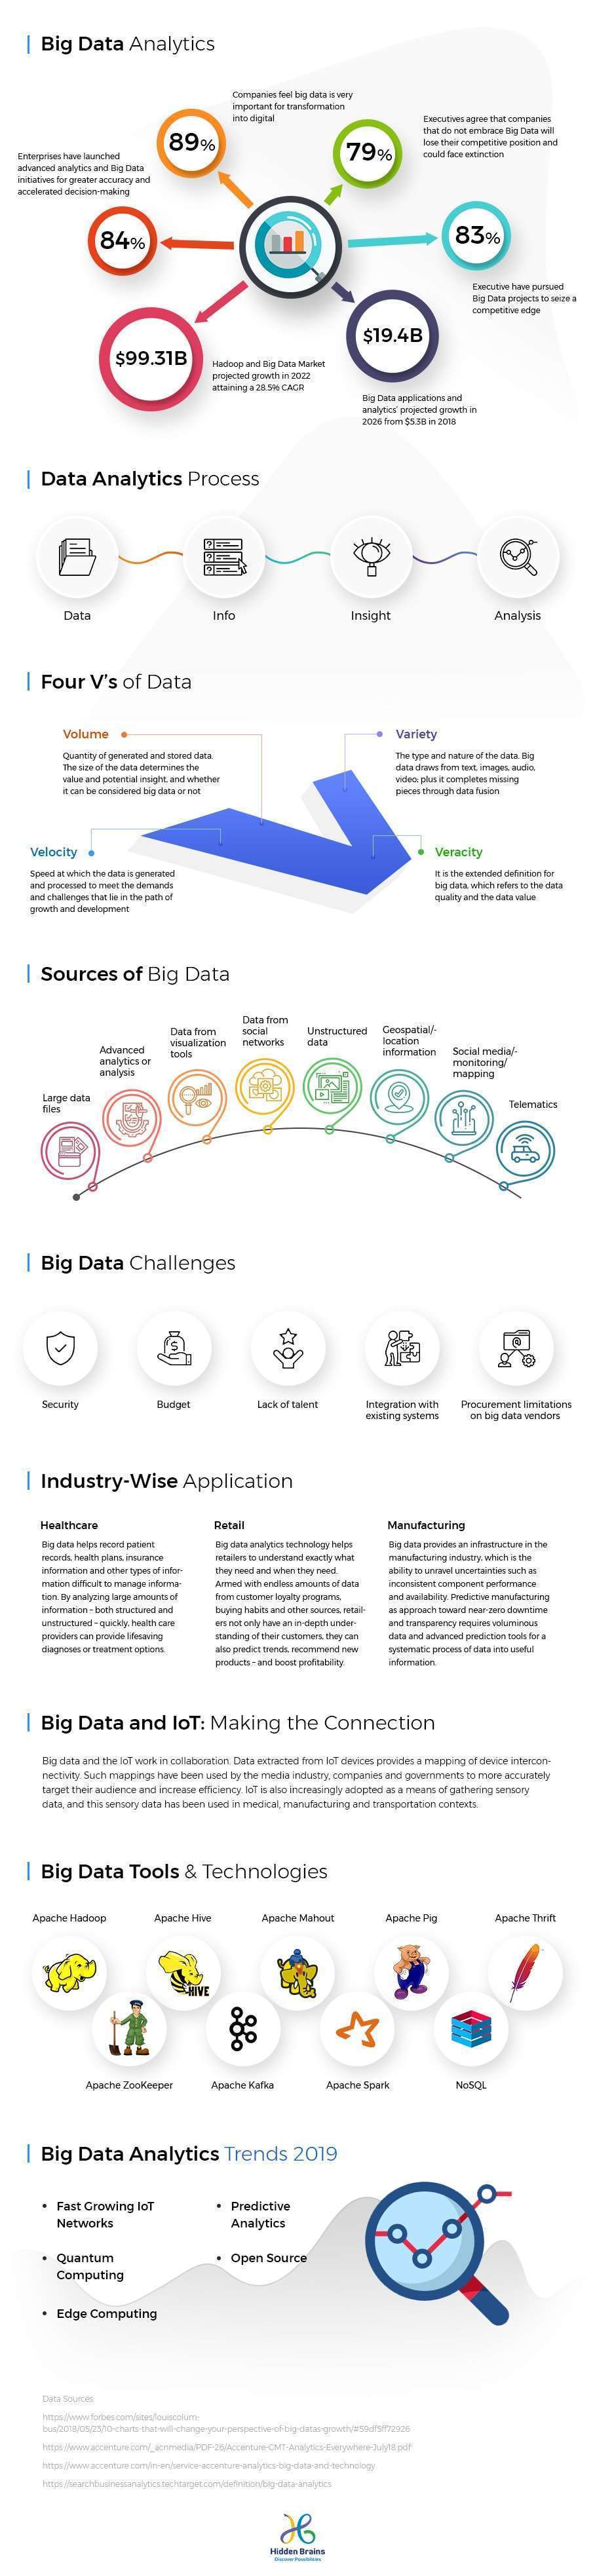 Infographic: Big Data Analytics for Enterprise